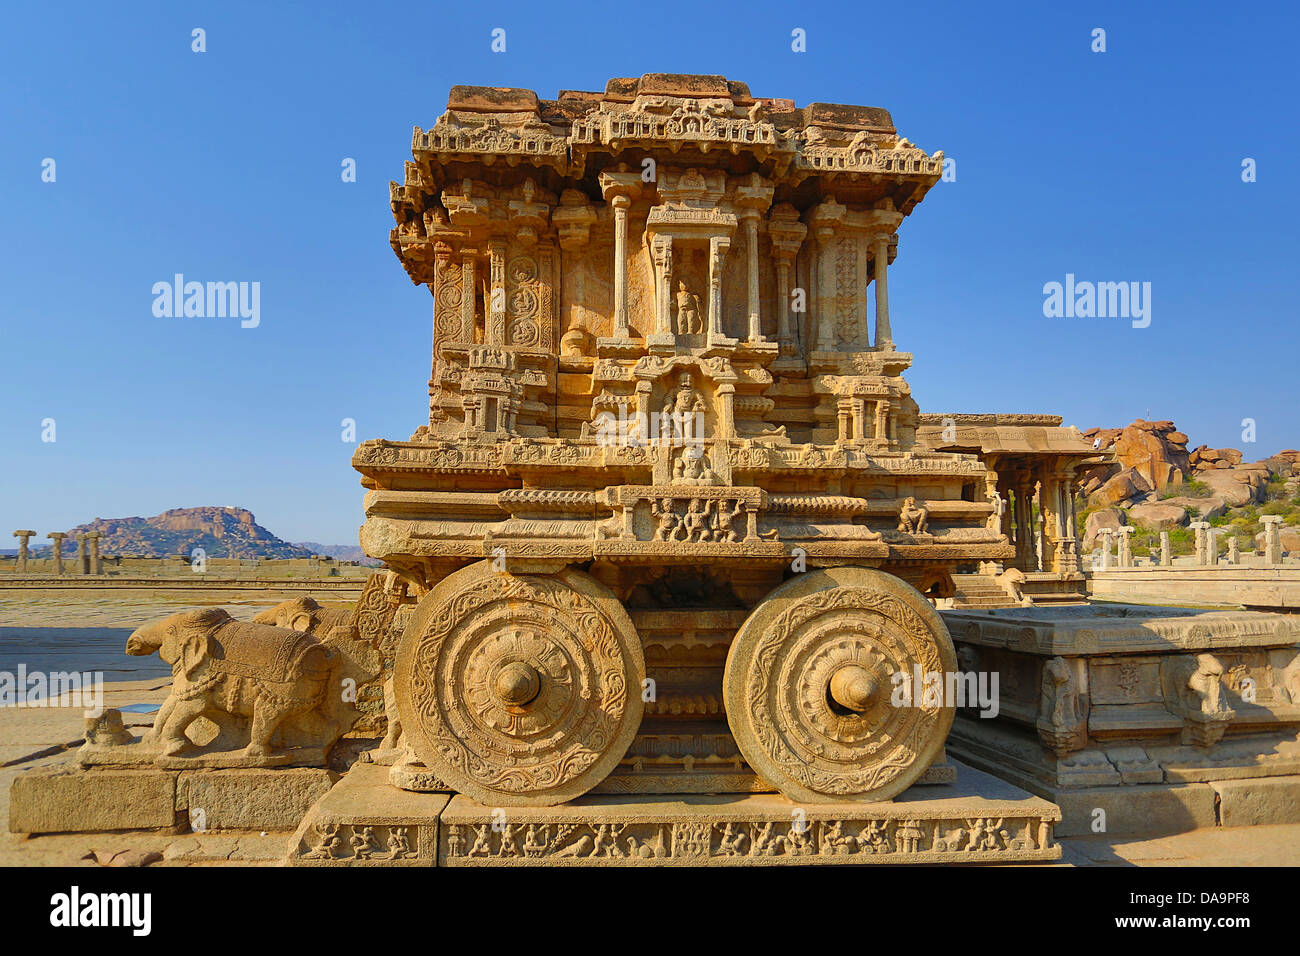 L'Inde, l'Inde, Asie, Karnataka, Hampi, ruines, Vijayanagar, 15e siècle, le patrimoine mondial, Vittala, Temple, architecture, cha Banque D'Images